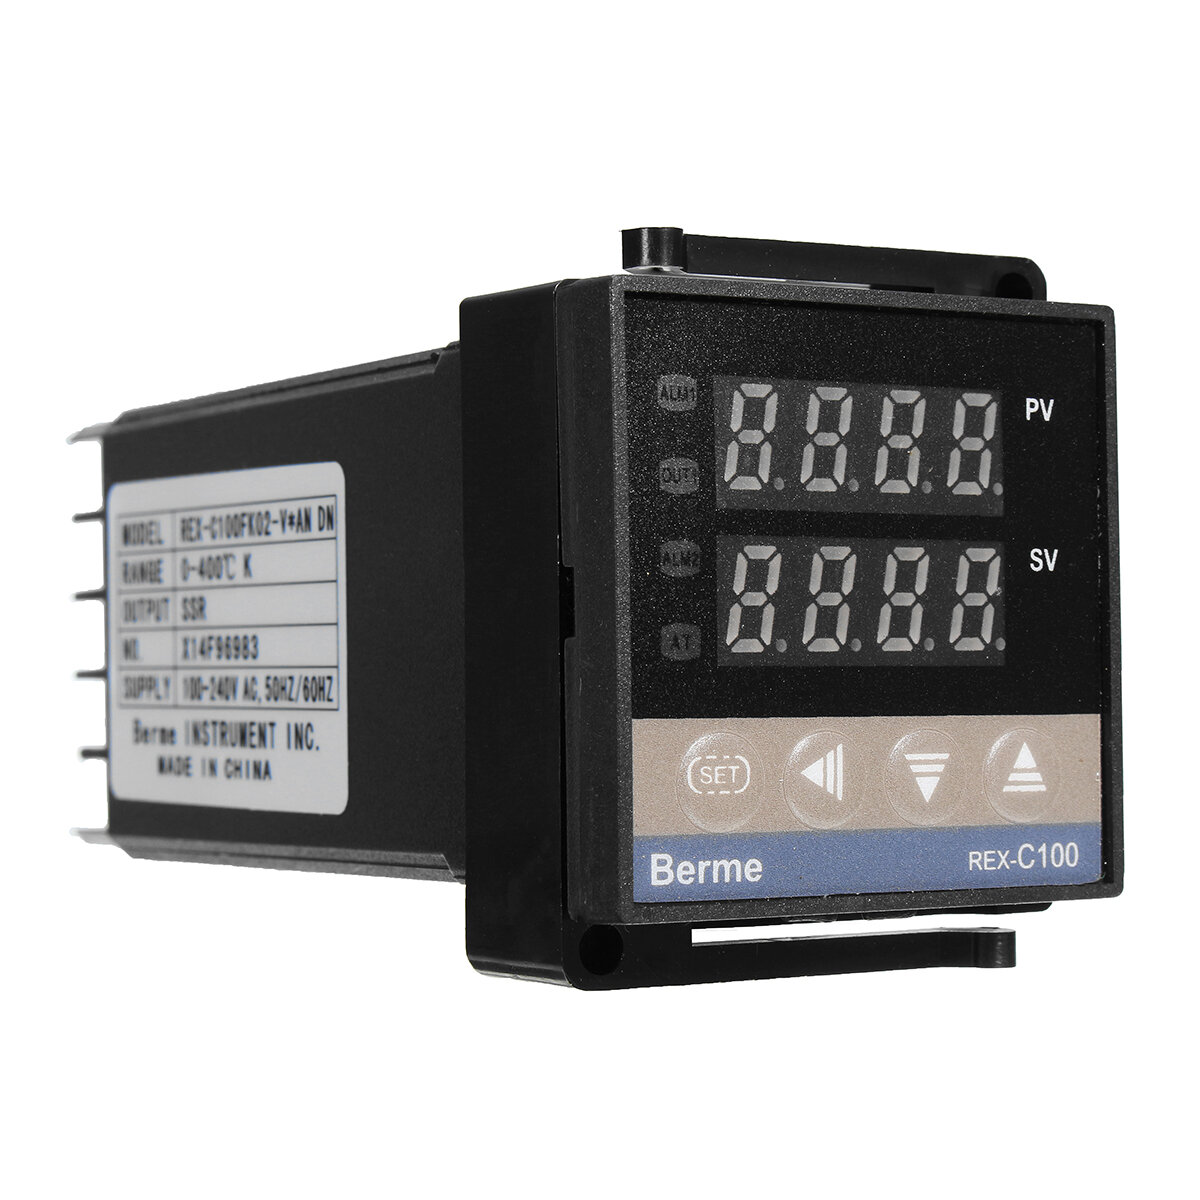 0℃~50℃ Alarm REX-C100 Digital Intelligent Thermostat LED PID Temperature Controller AC110V-240V